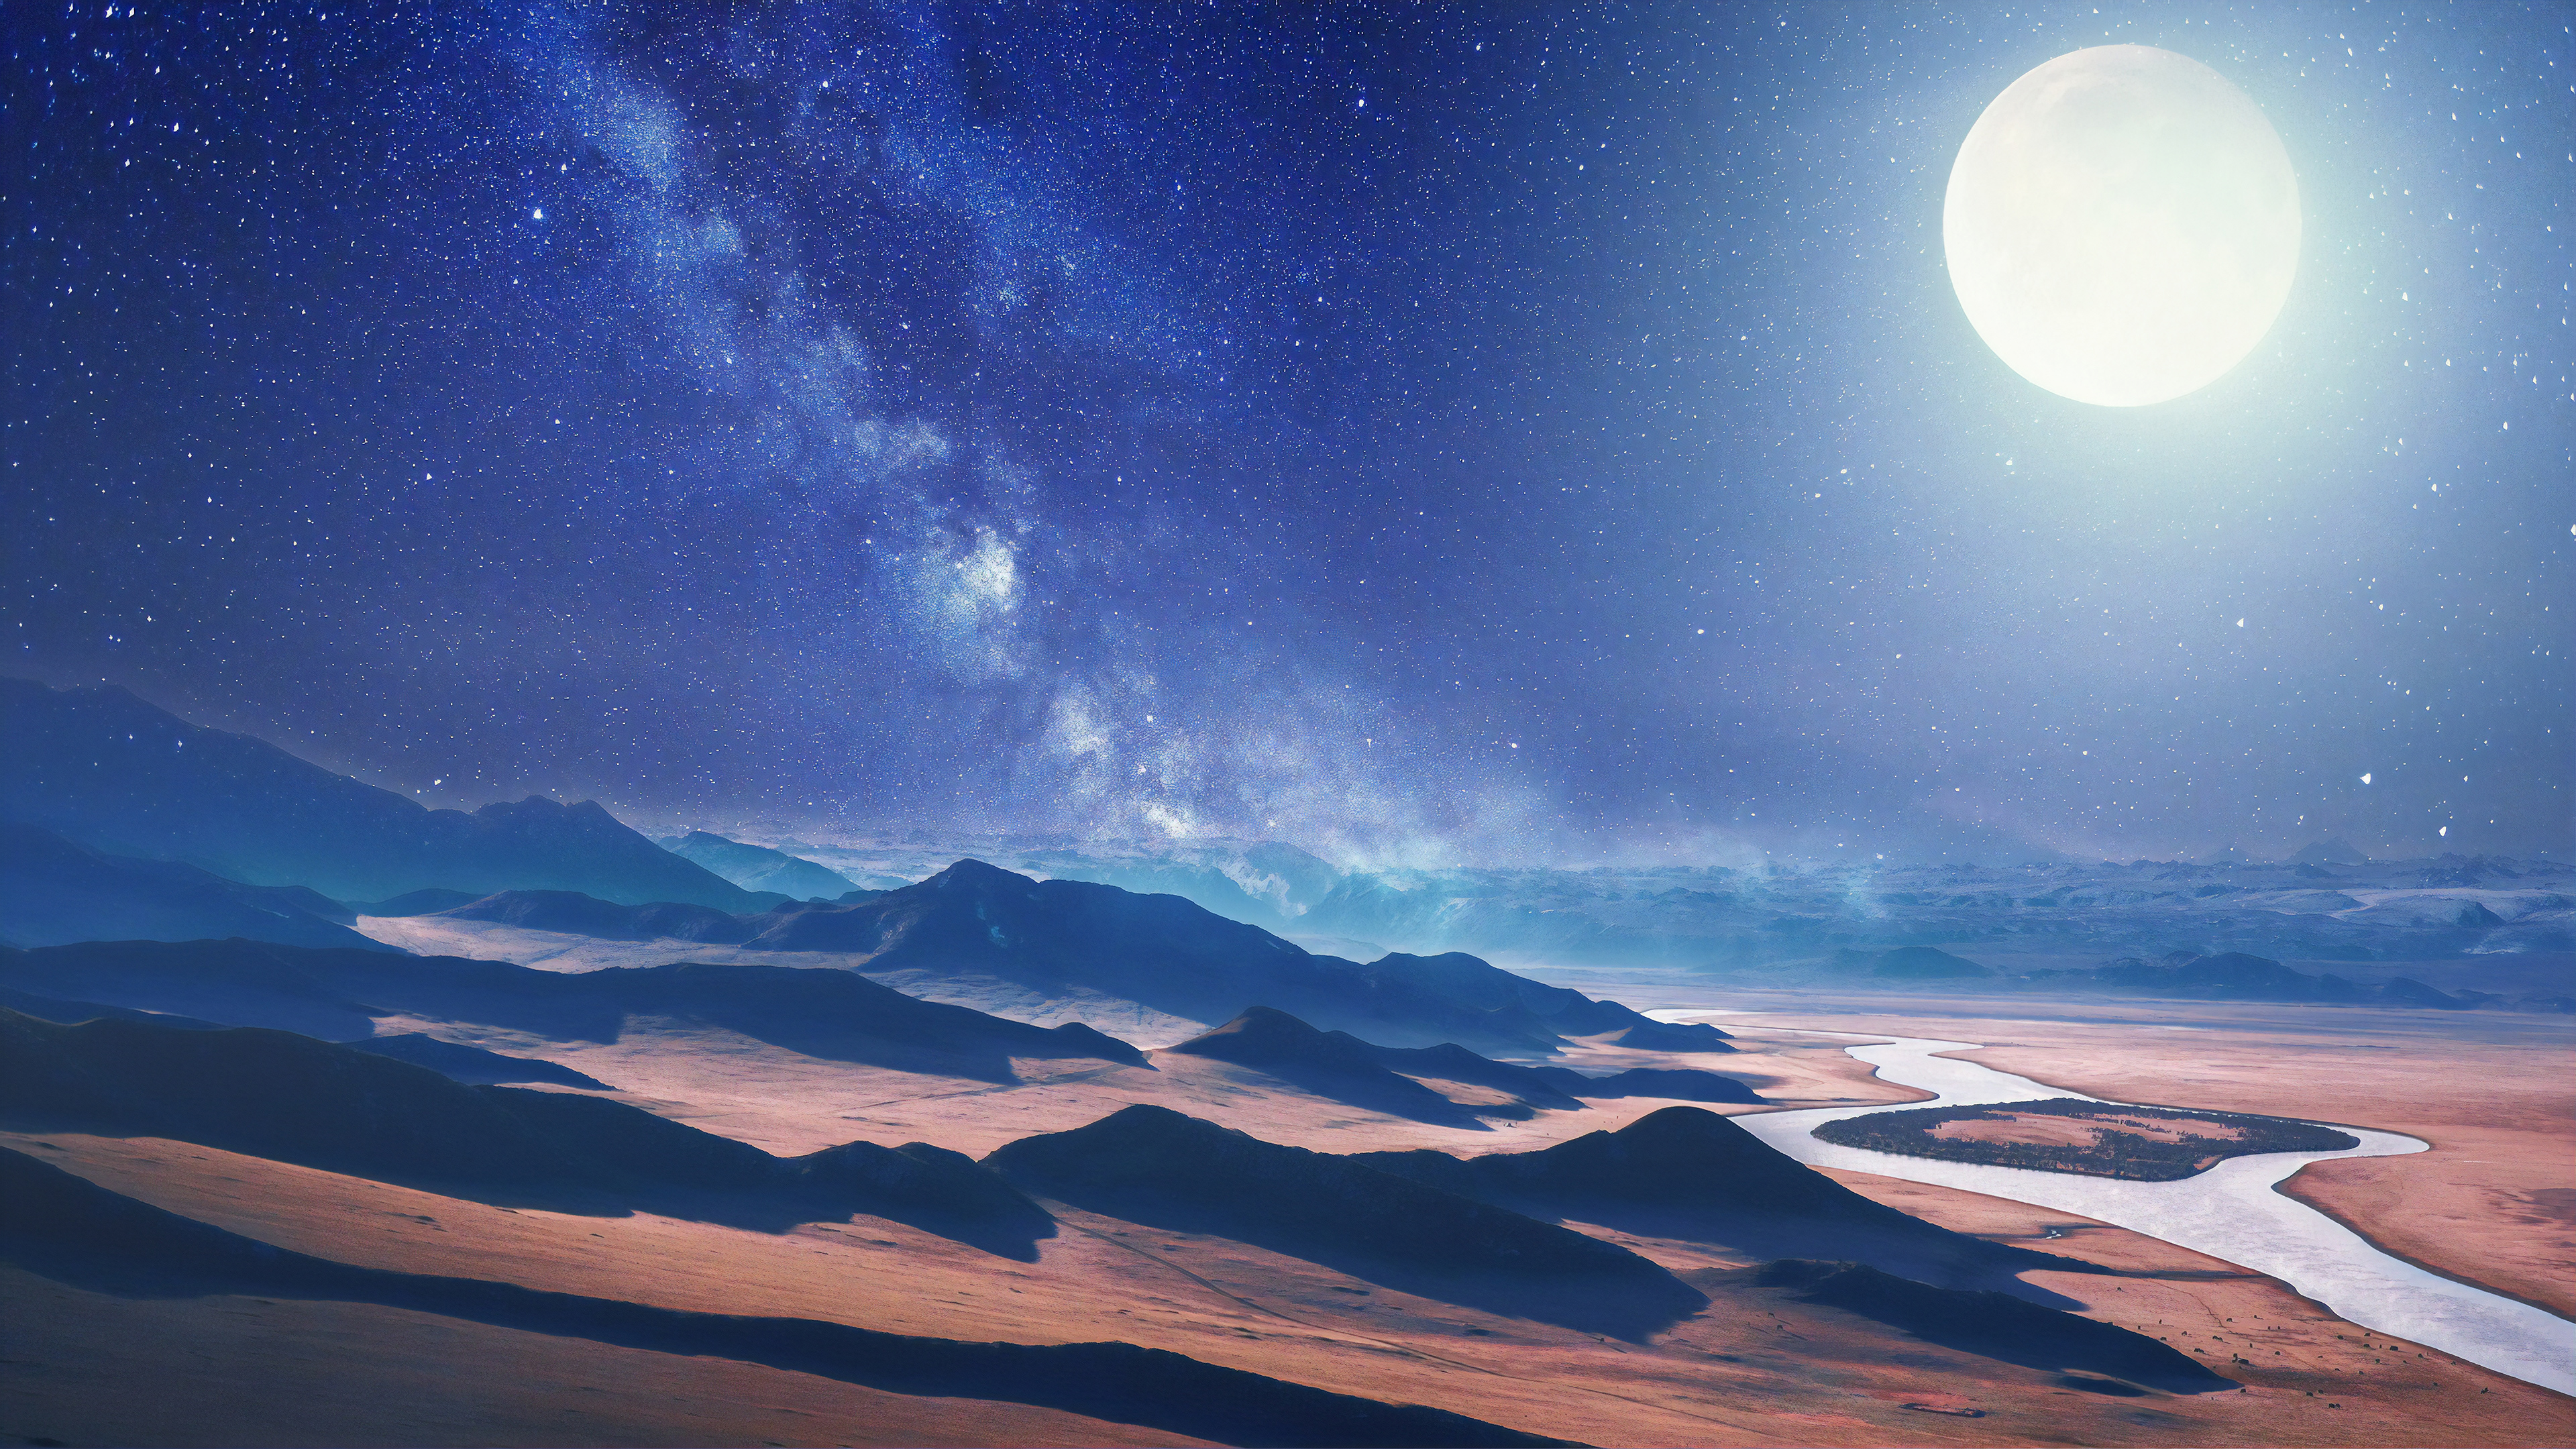 Moon Night Desert 4k, HD Artist, 4k Wallpapers, Images, Backgrounds